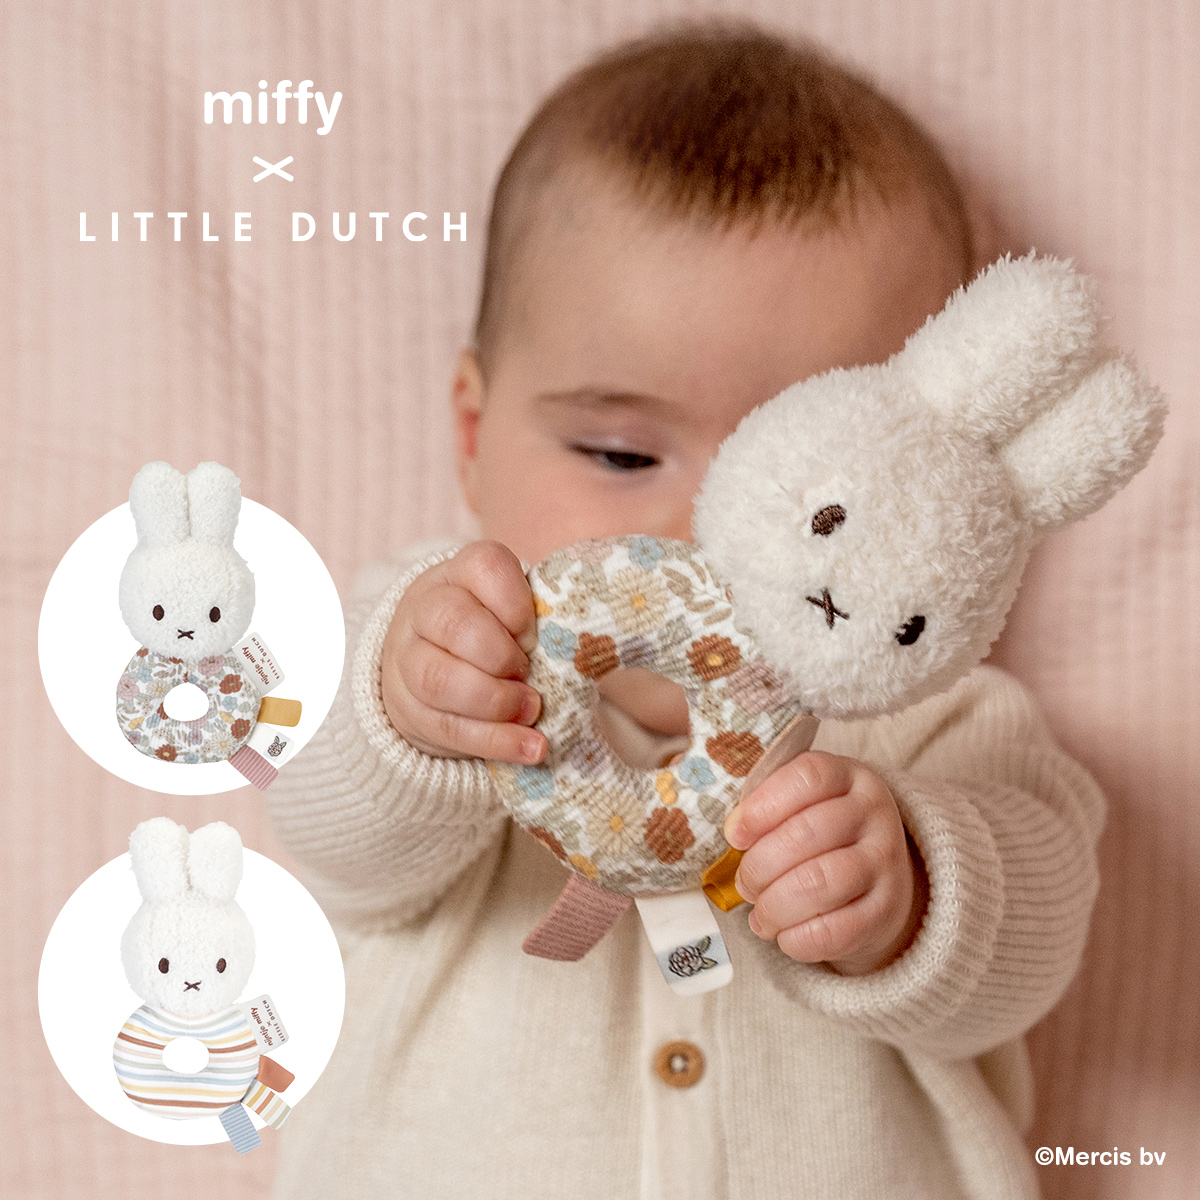 |NEW| Little Dutch miffy x Little Dutch Miffy little Dodge baby погремушка l Vintage little цветок Sunny полоса подарок подарок ...